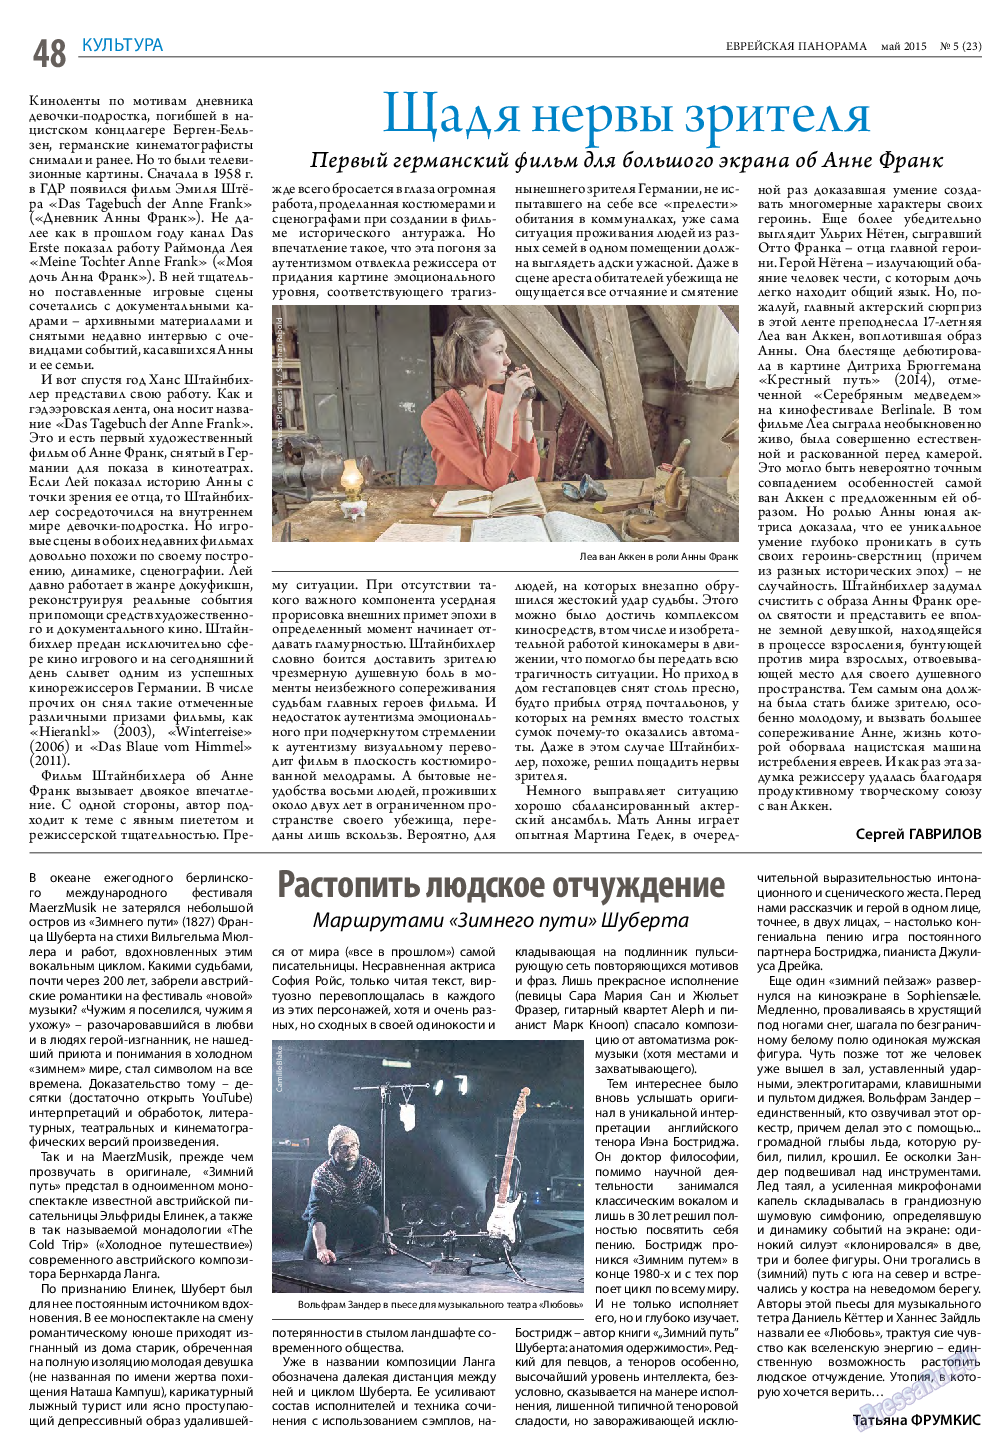 Еврейская панорама, газета. 2016 №5 стр.48